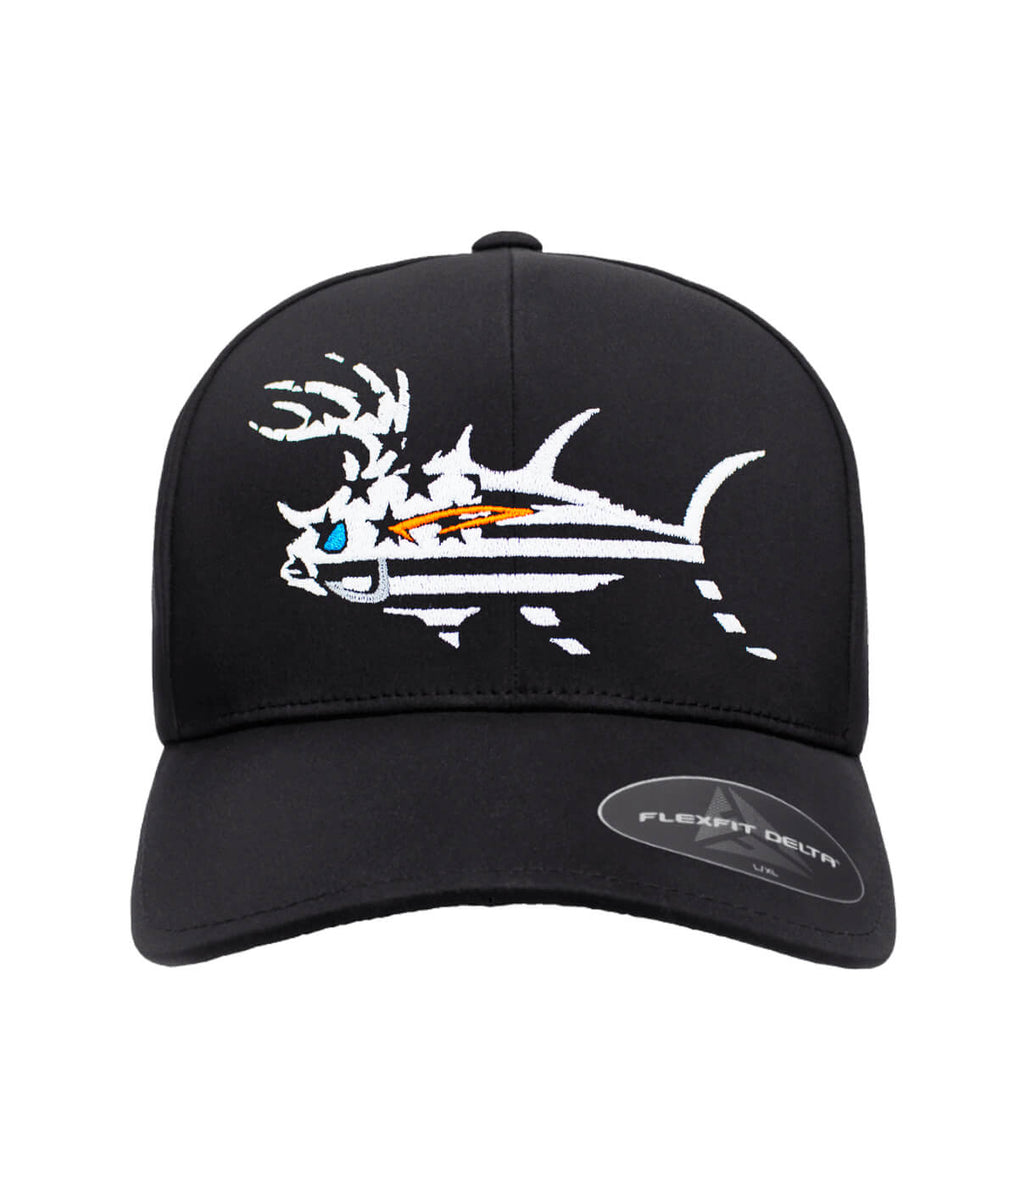 Buck-Eye Flexfit & Hats | NICERIDE Caps Trucker Baseball